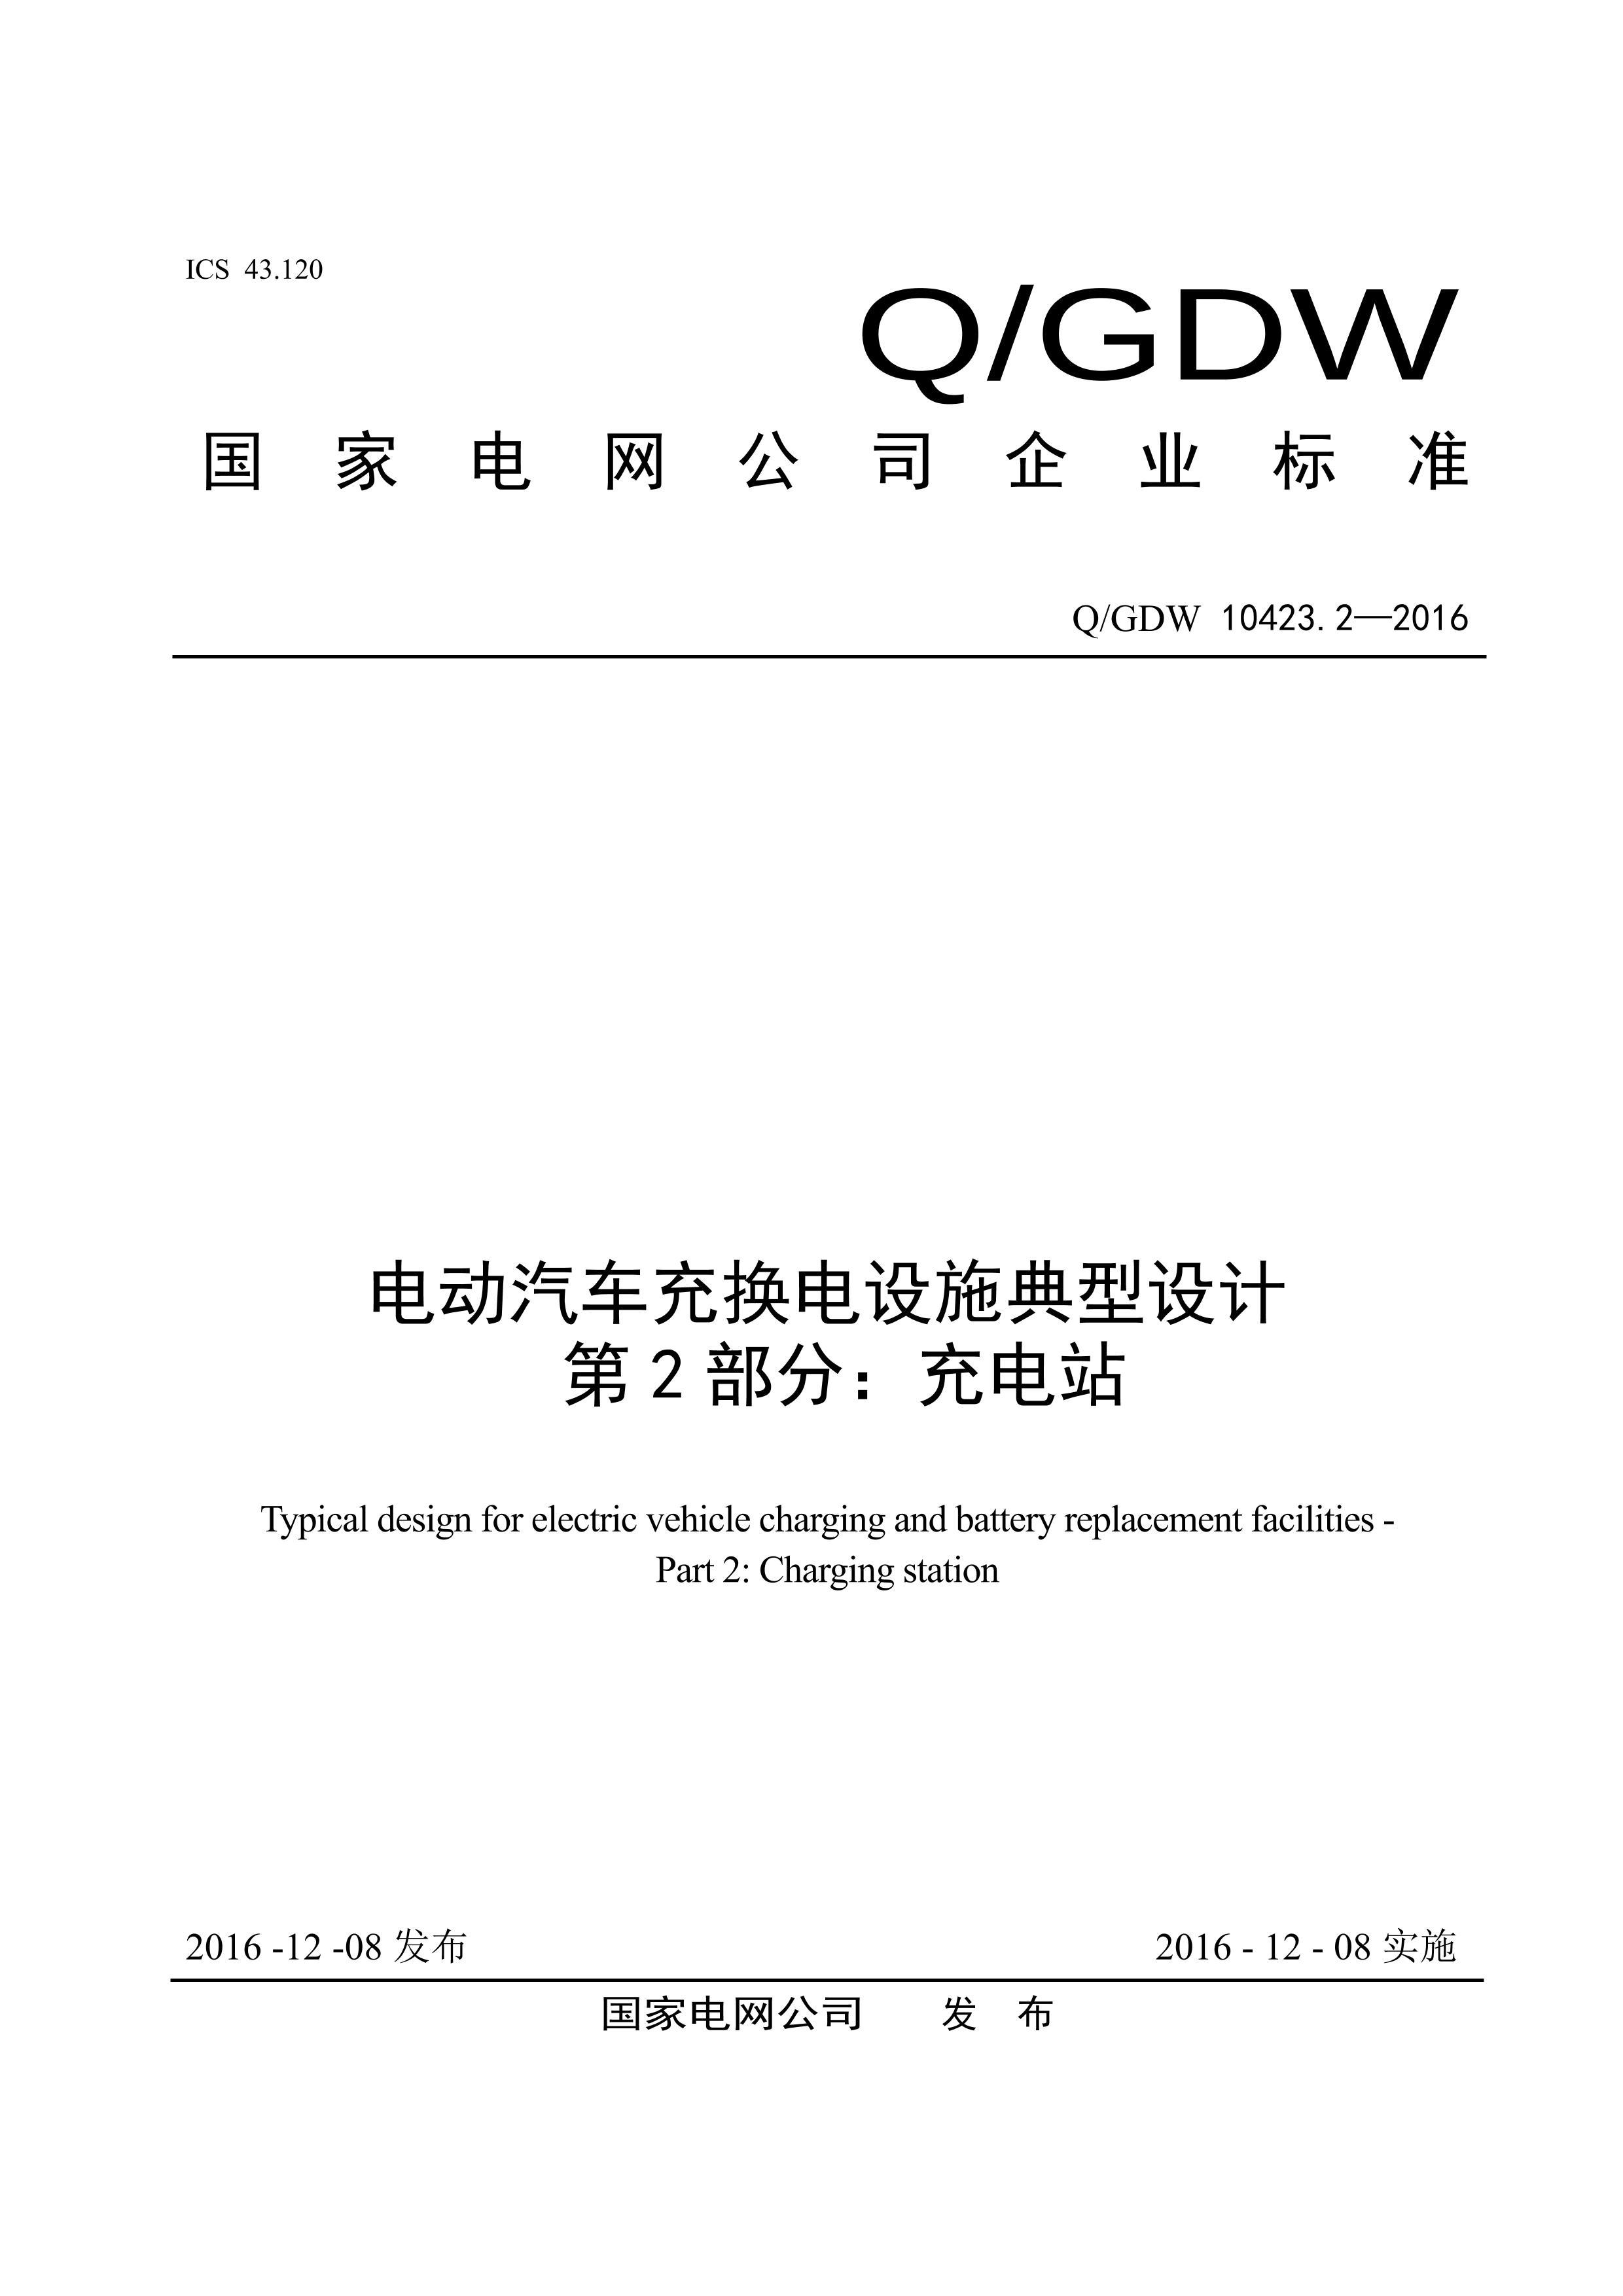 QGDW 10423.2-2016 綯任ʩ 2֣վ.PDF1ҳ